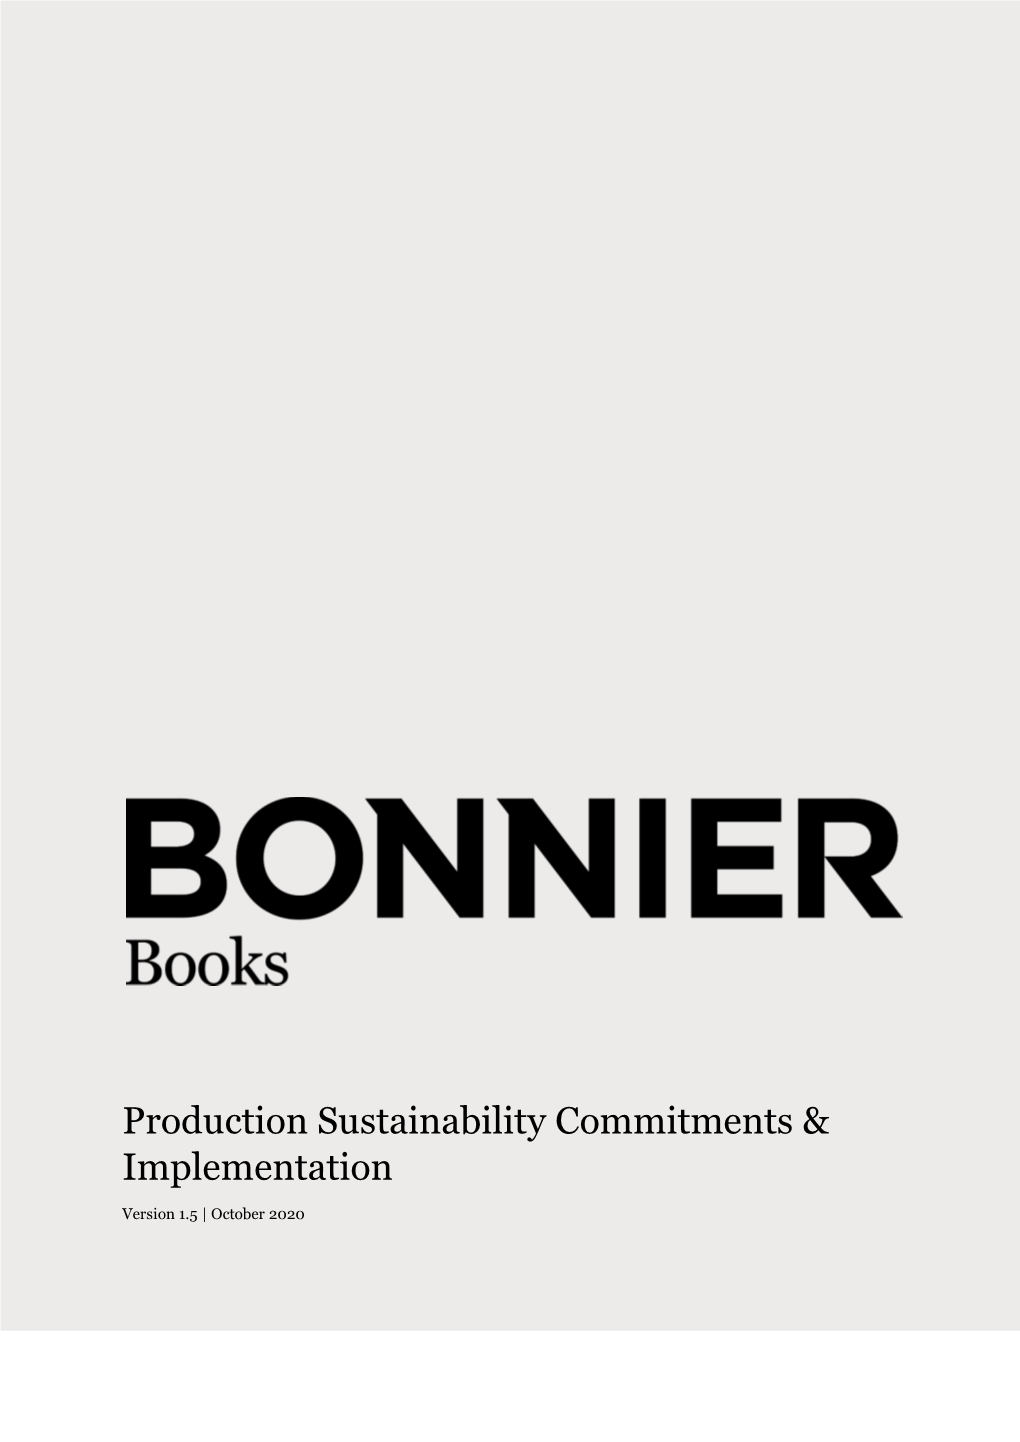 Production Sustainability Commitments & Implementation